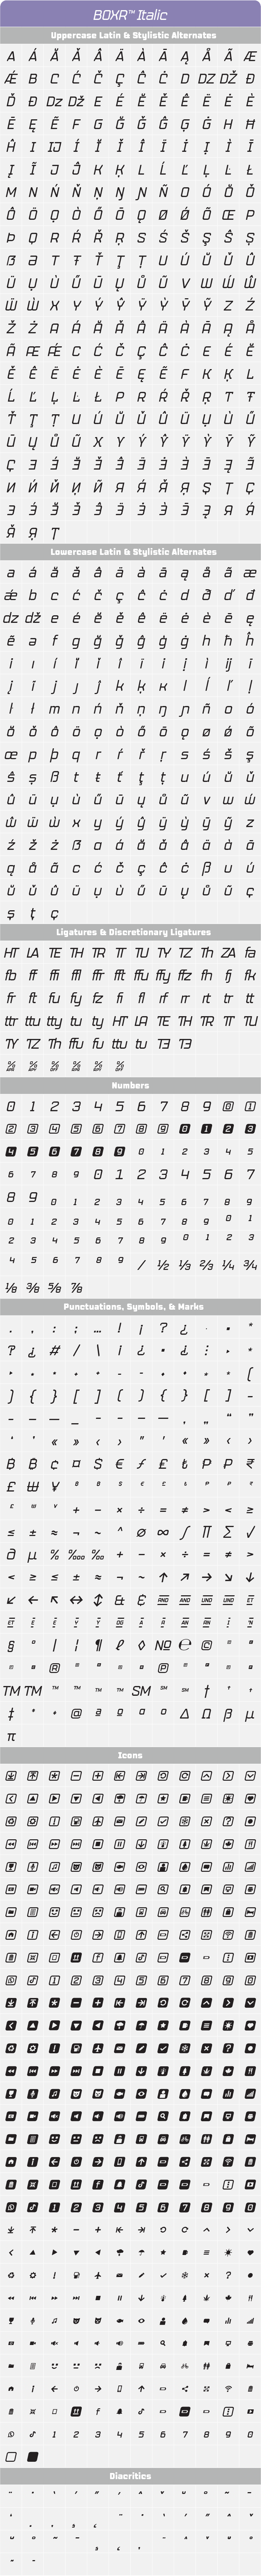 Boxr-Fonts-Italic-Glyph-Tables.png